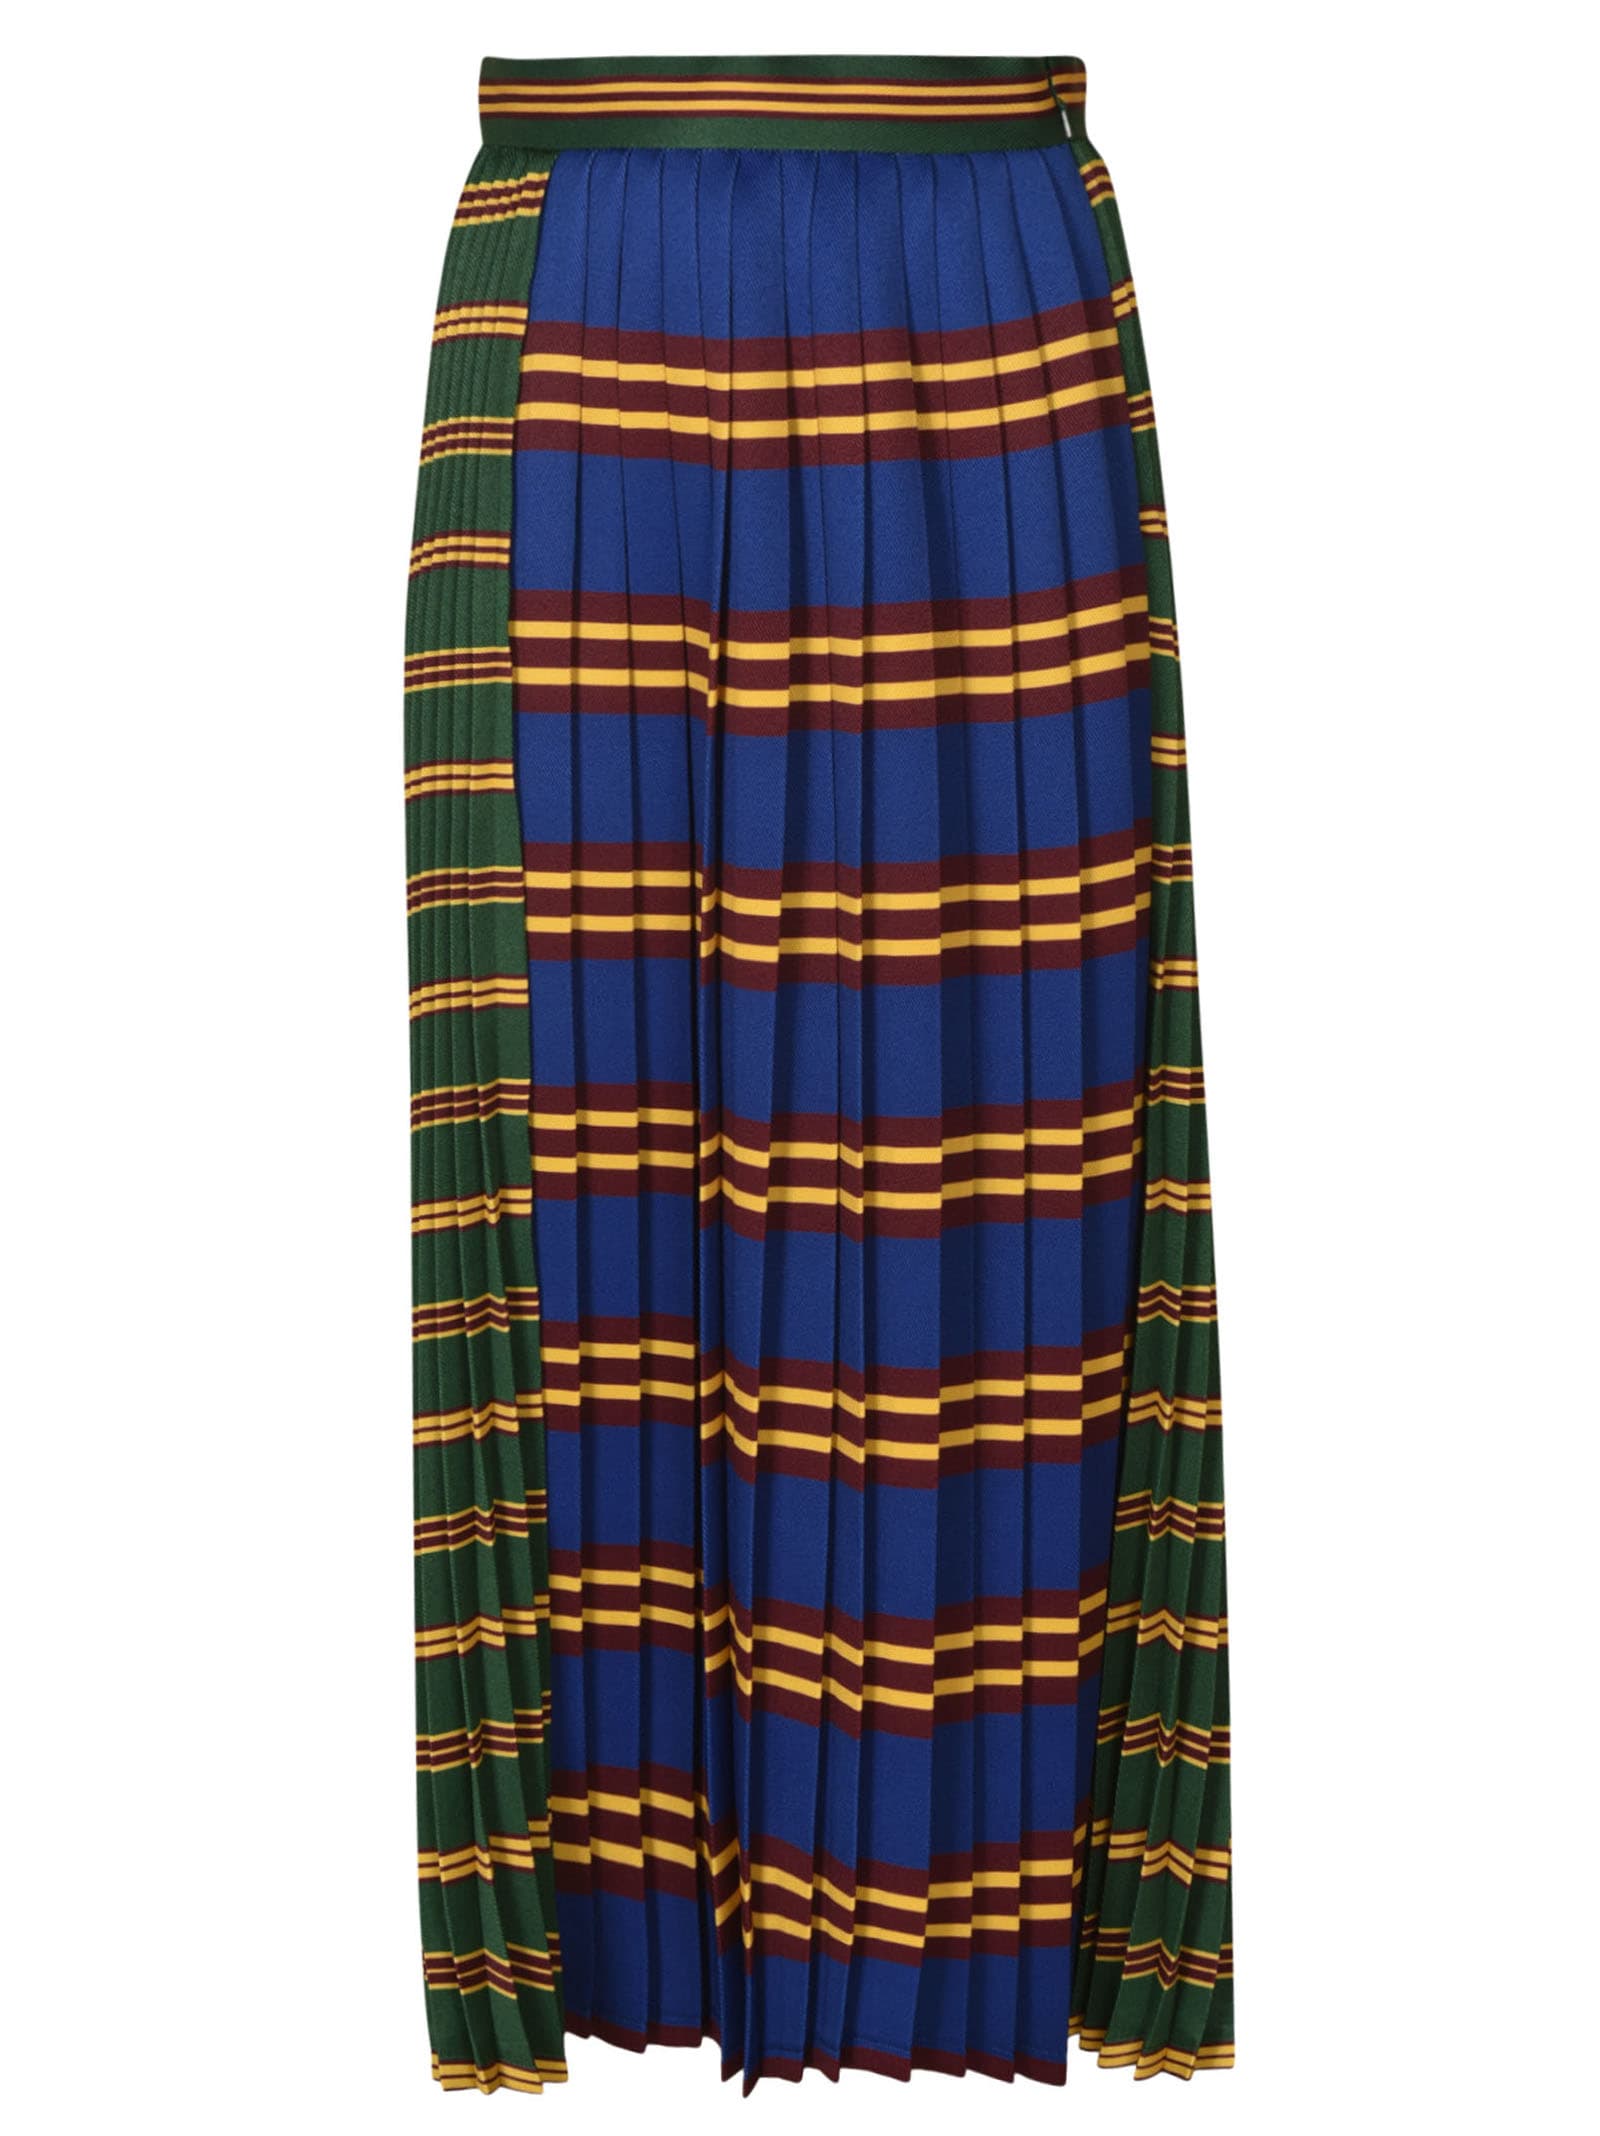 Philosophy di Lorenzo Serafini Stripe Patterned Pleated Skirt